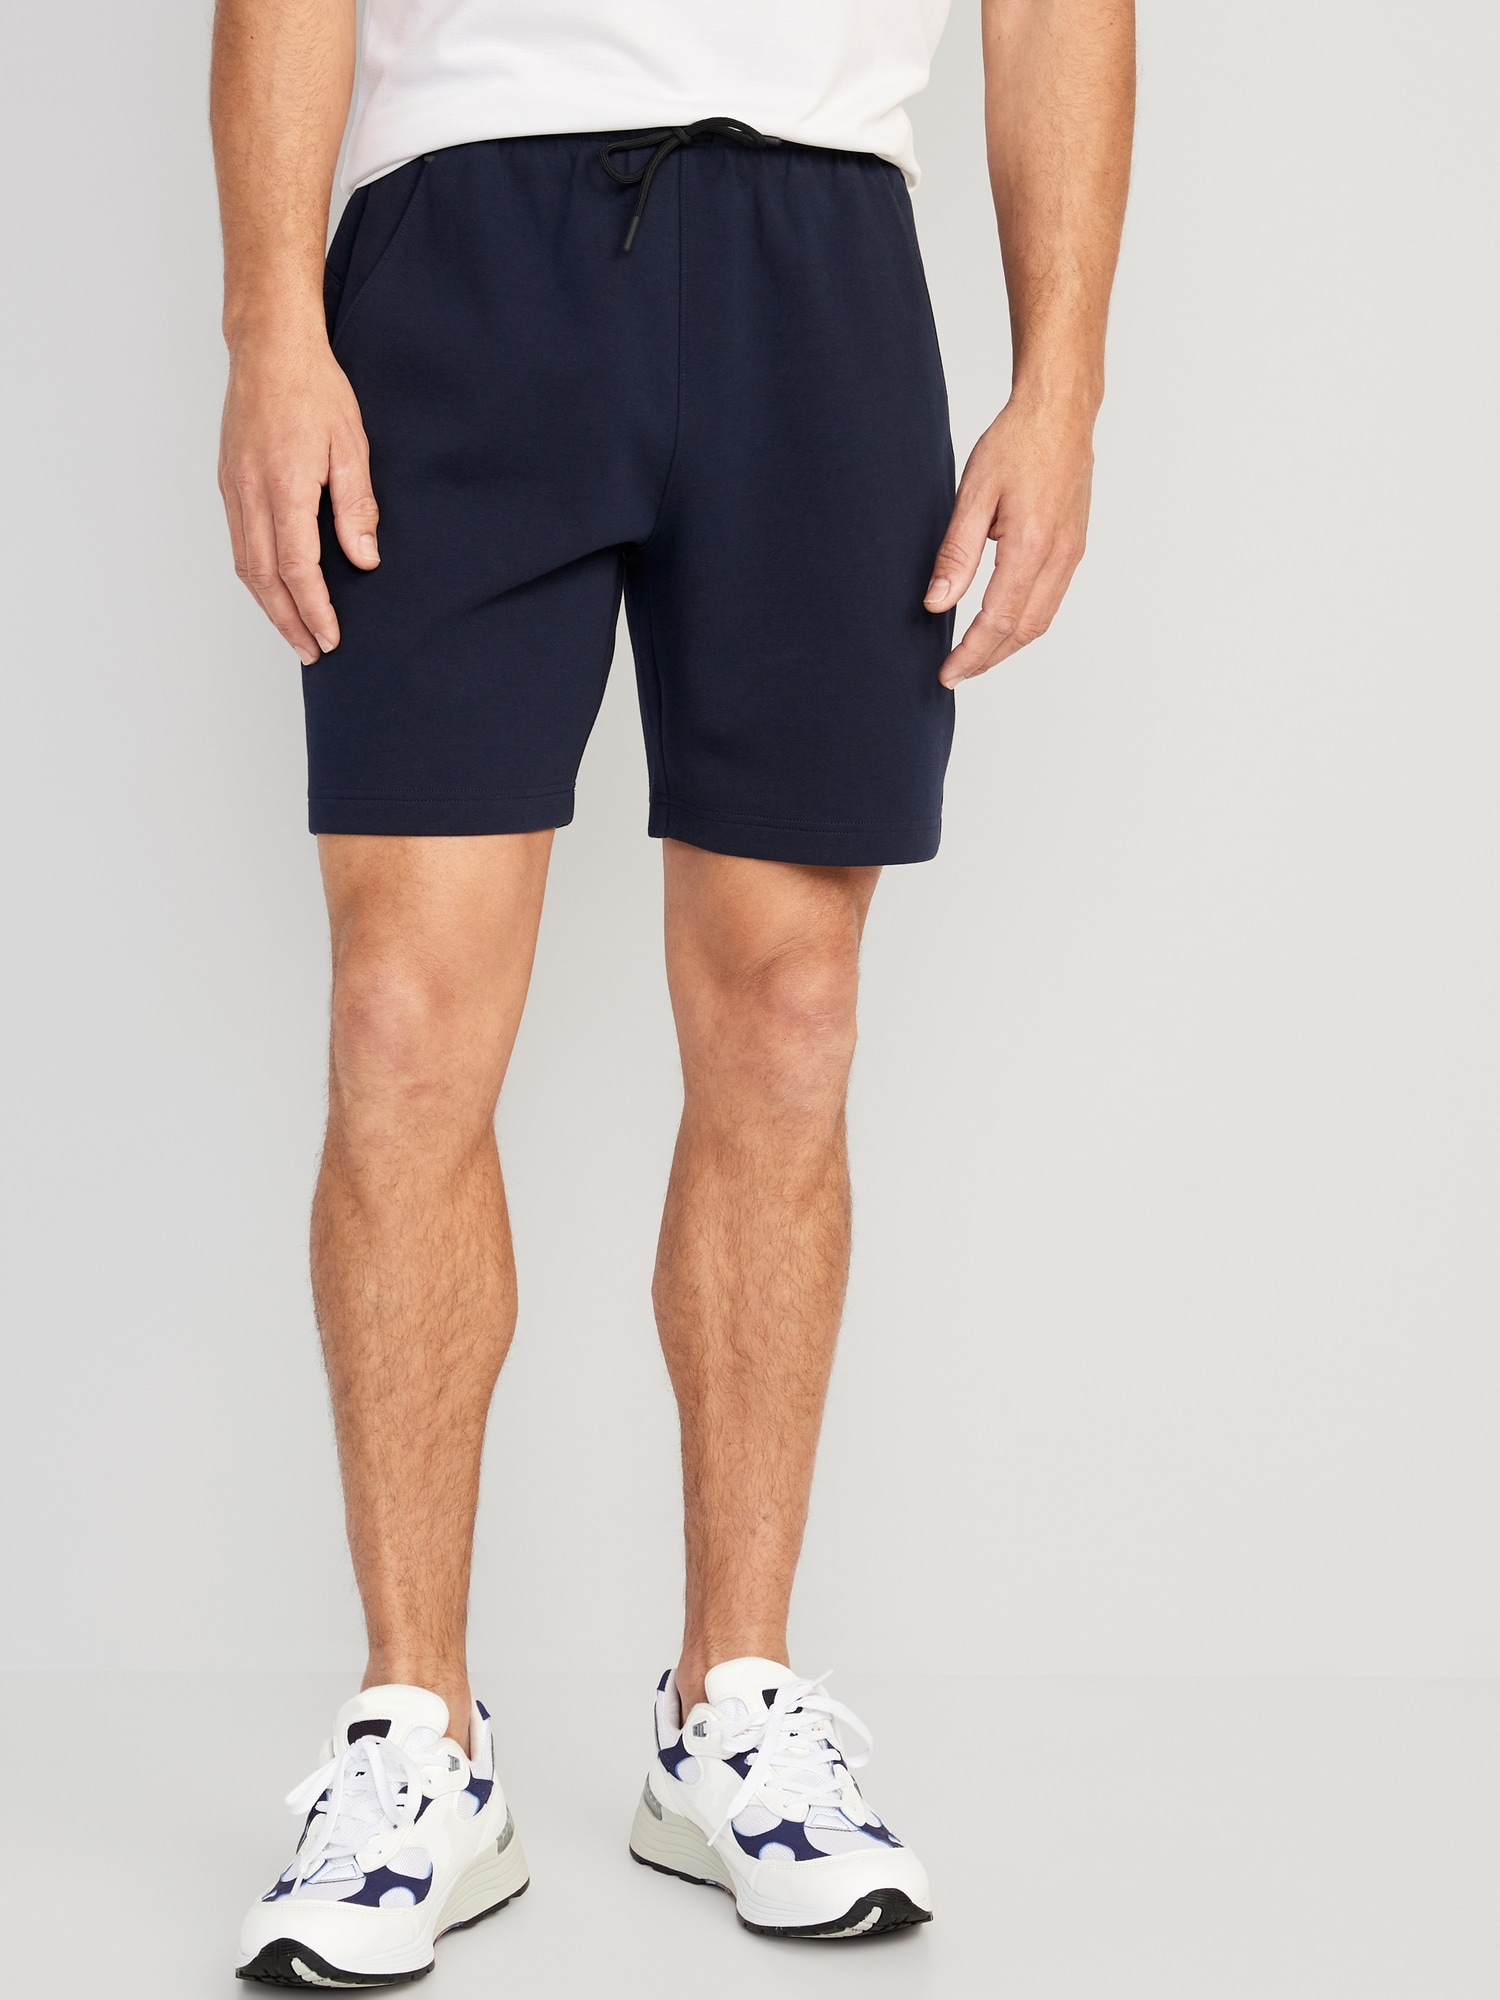 Old Navy Dynamic Fleece Sweat Shorts for Men -- 7-inch inseam blue. 1